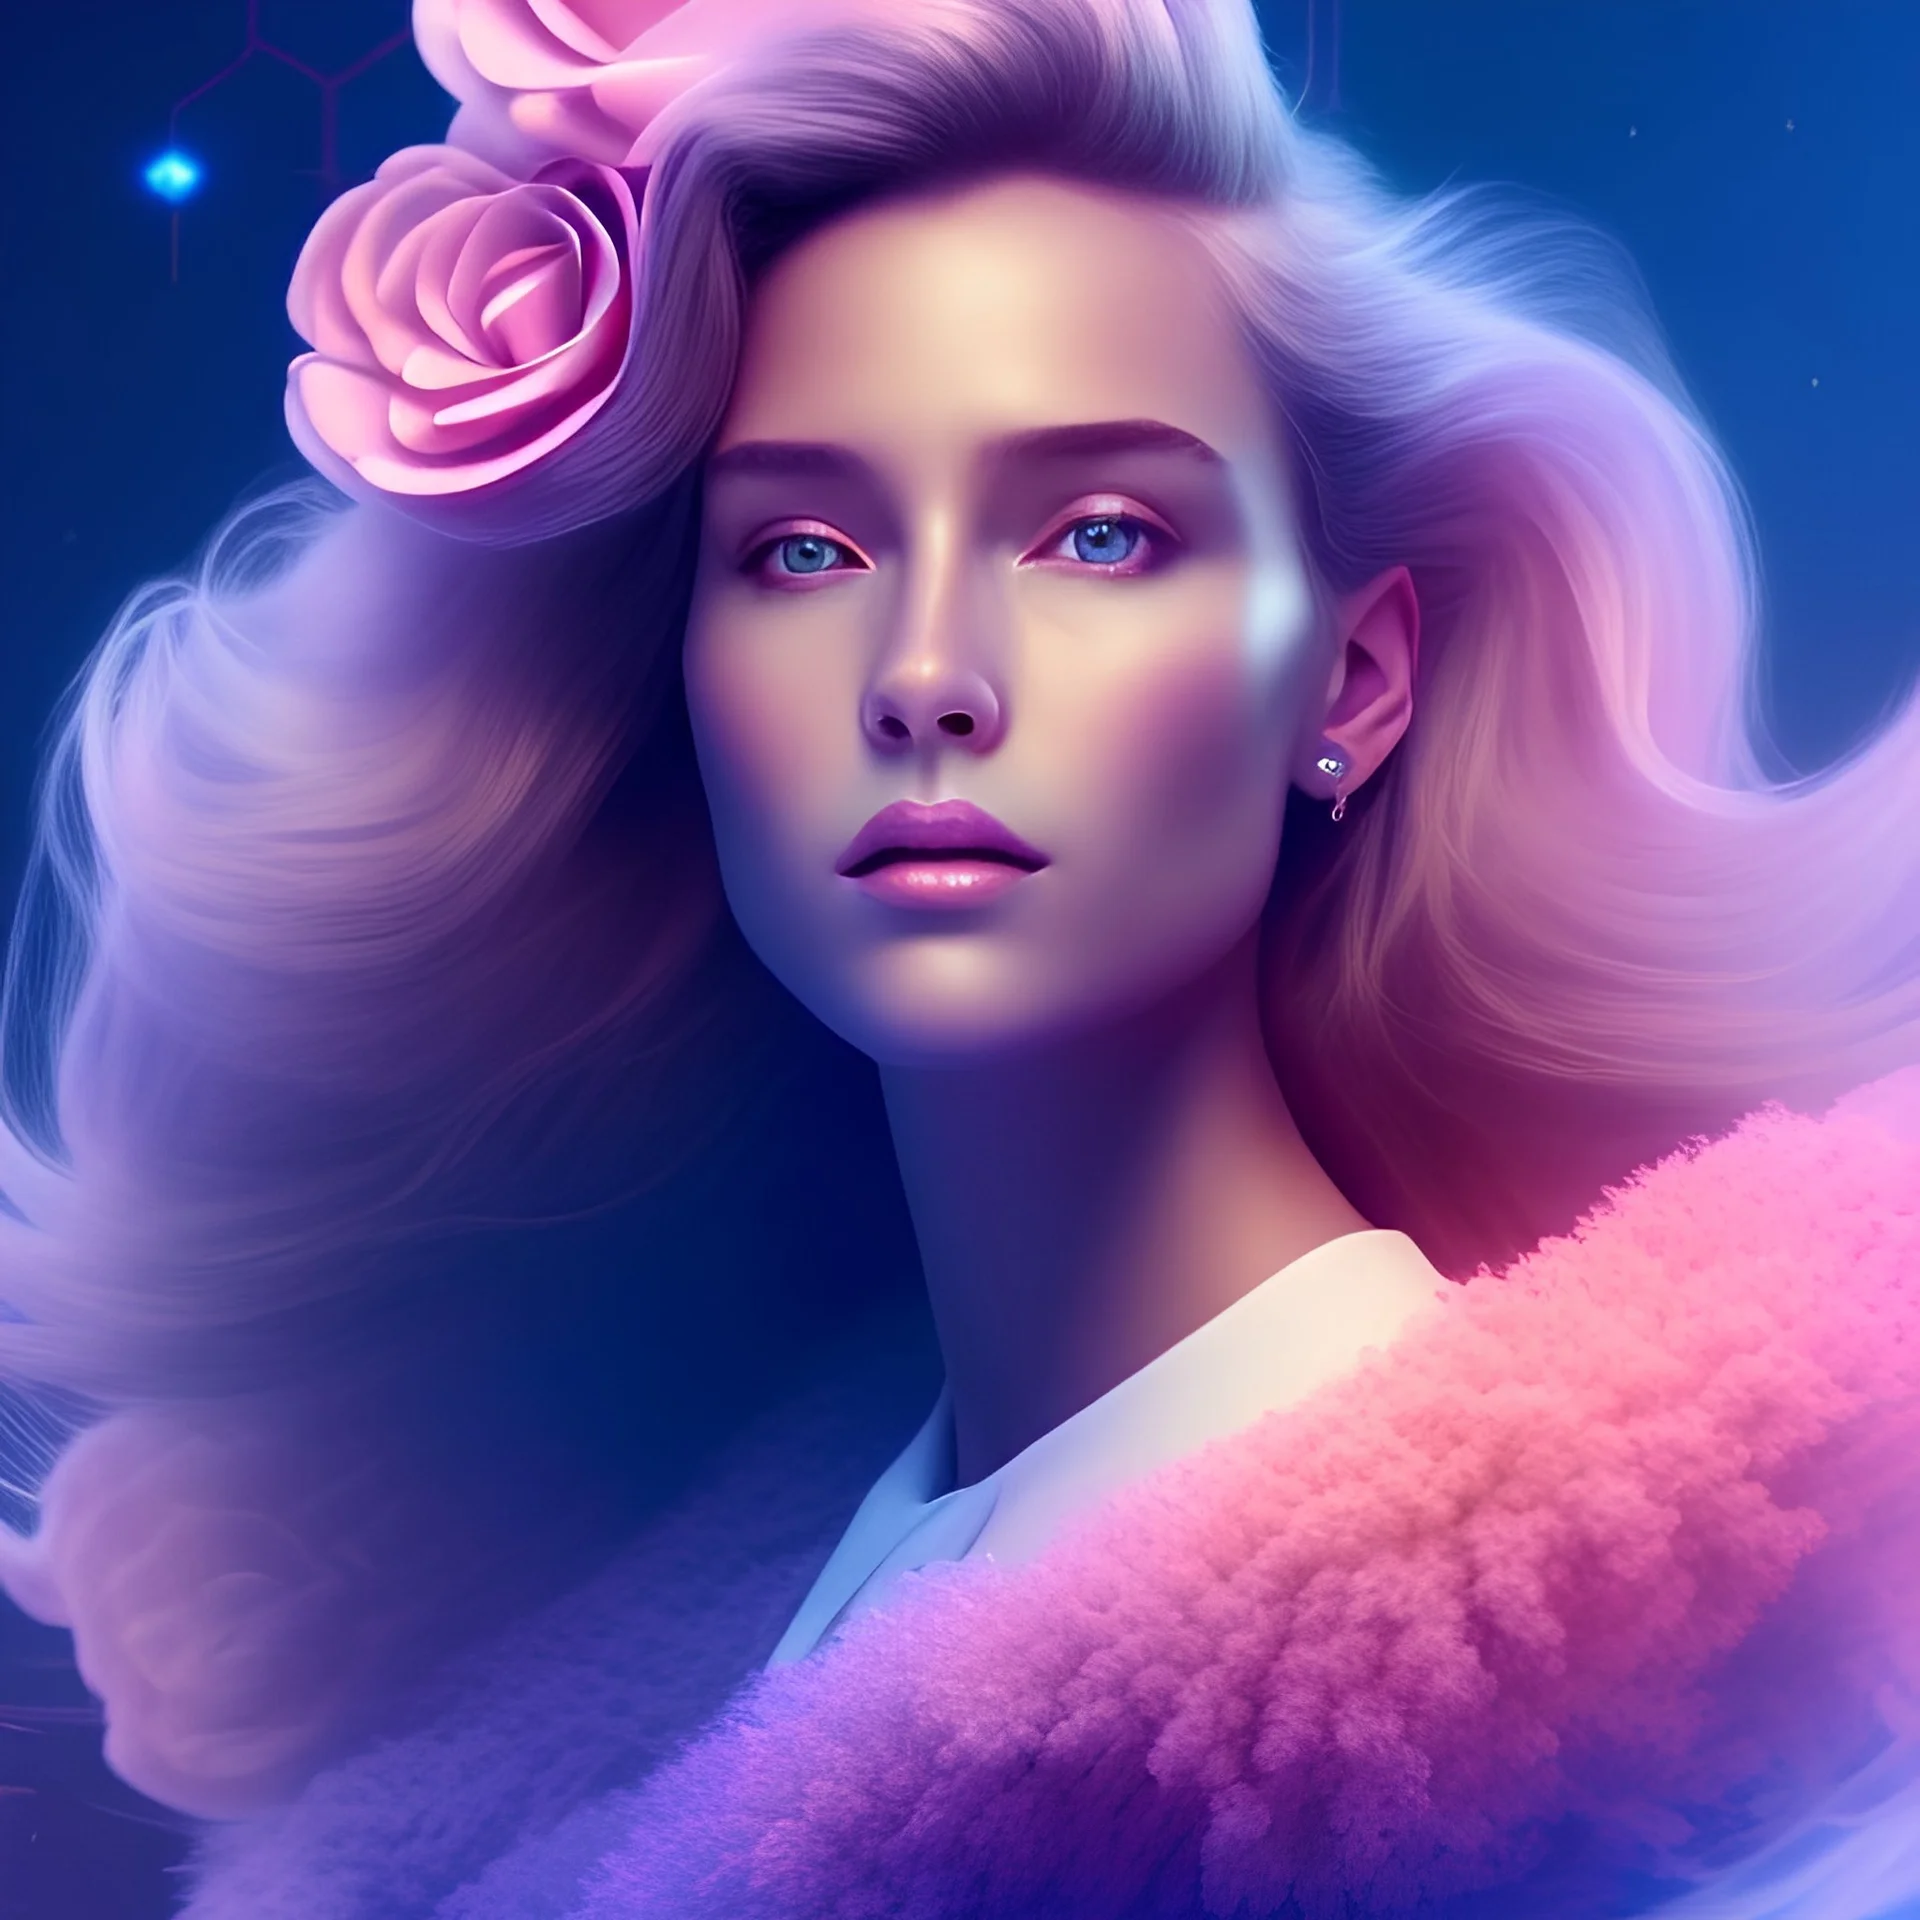 A portrait very beautiful woman ,smiling, longs hairs,elegant, atmospheric, realistic, cinematic lighting, pink blue light, 8k, galactic atmosphere, flowers